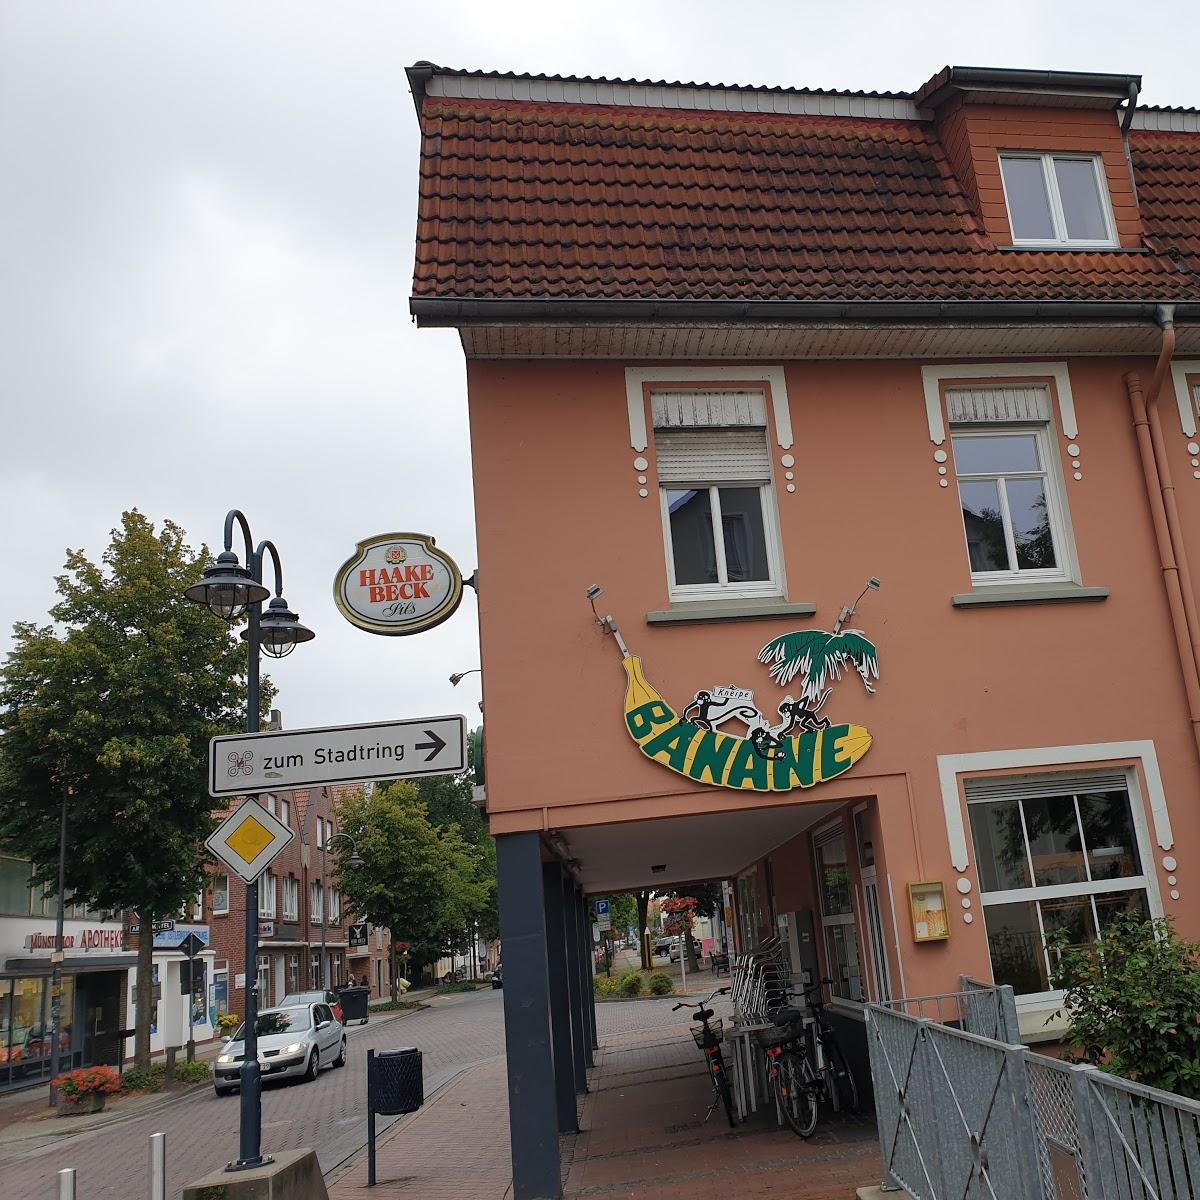 Restaurant "Banane" in Vechta